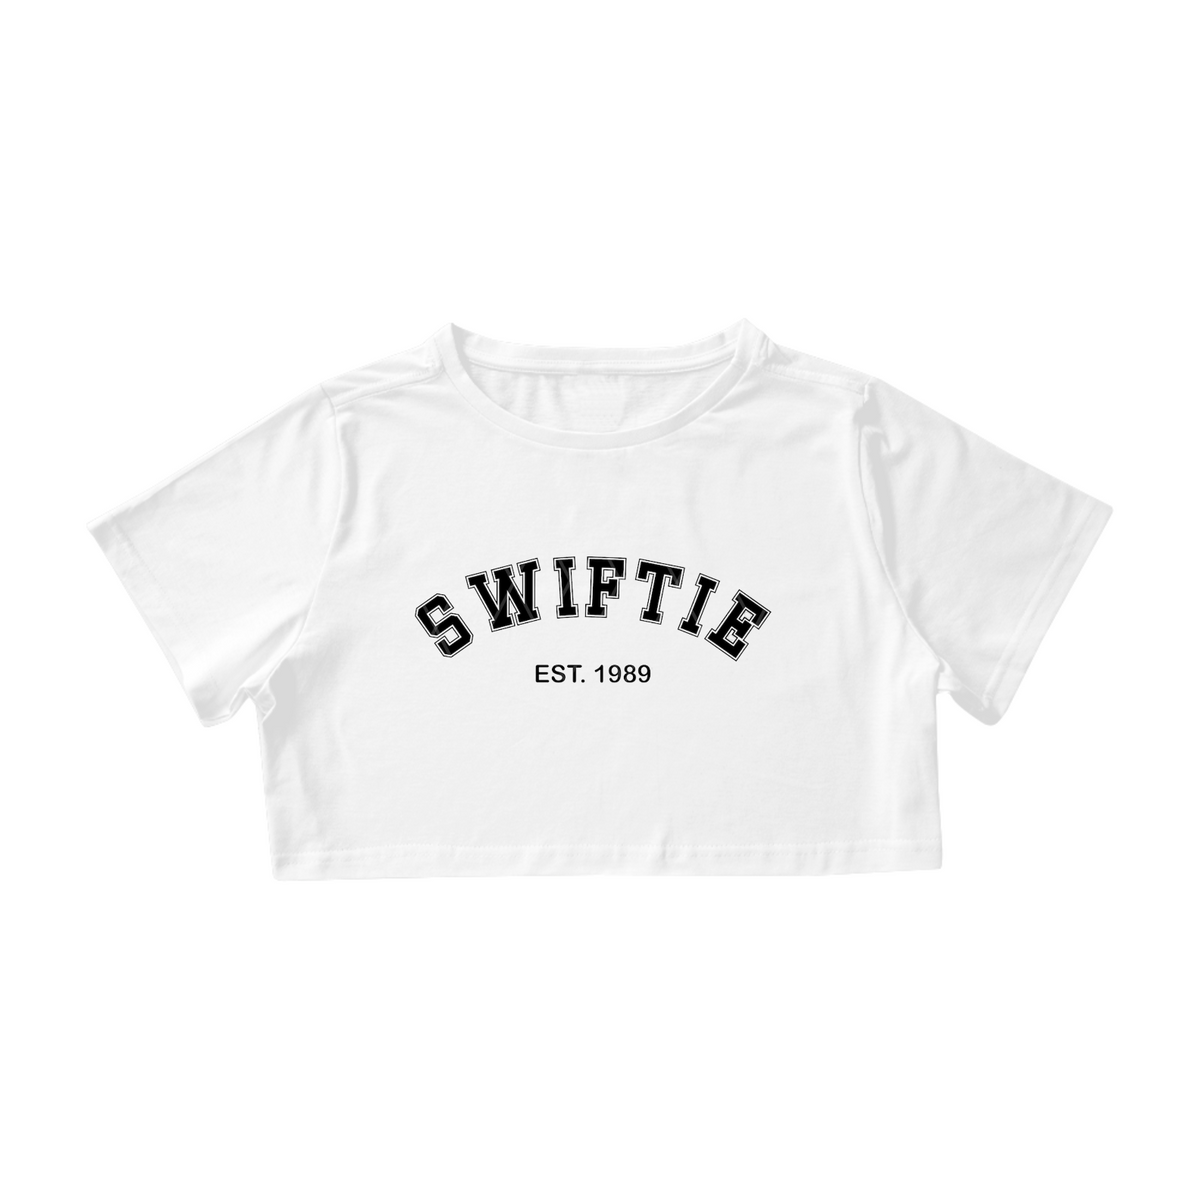 Nome do produto: CROPPED - SWIFTIE | TAYLOR SWIFT